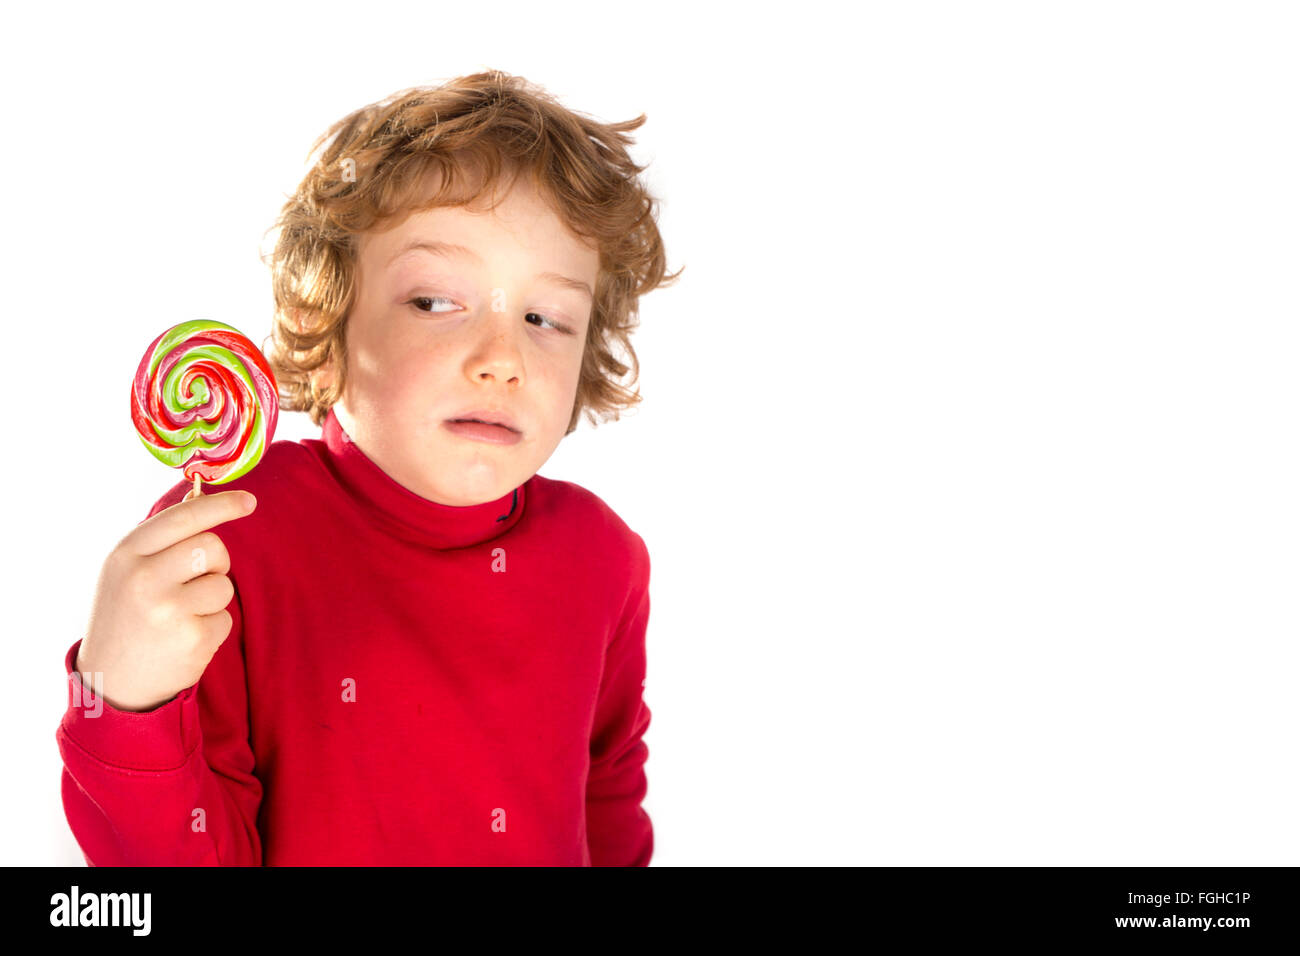 Boy eating lollipop isolated on white background Stock Photo